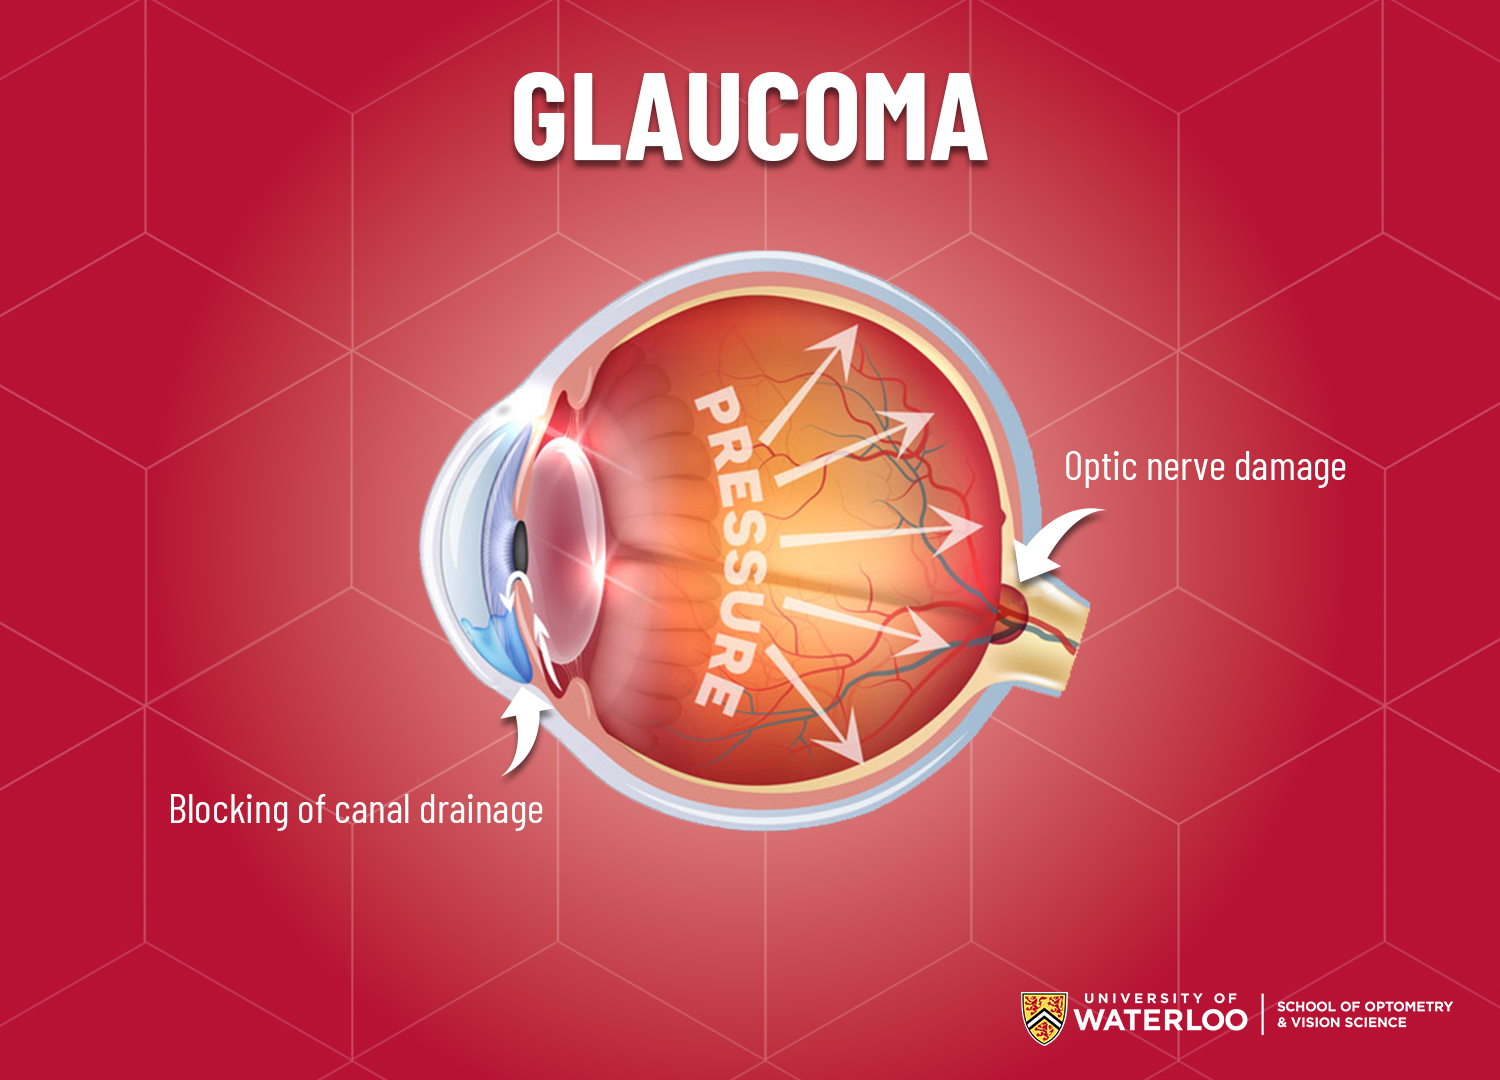 Graphic of eye showing glaucoma damage